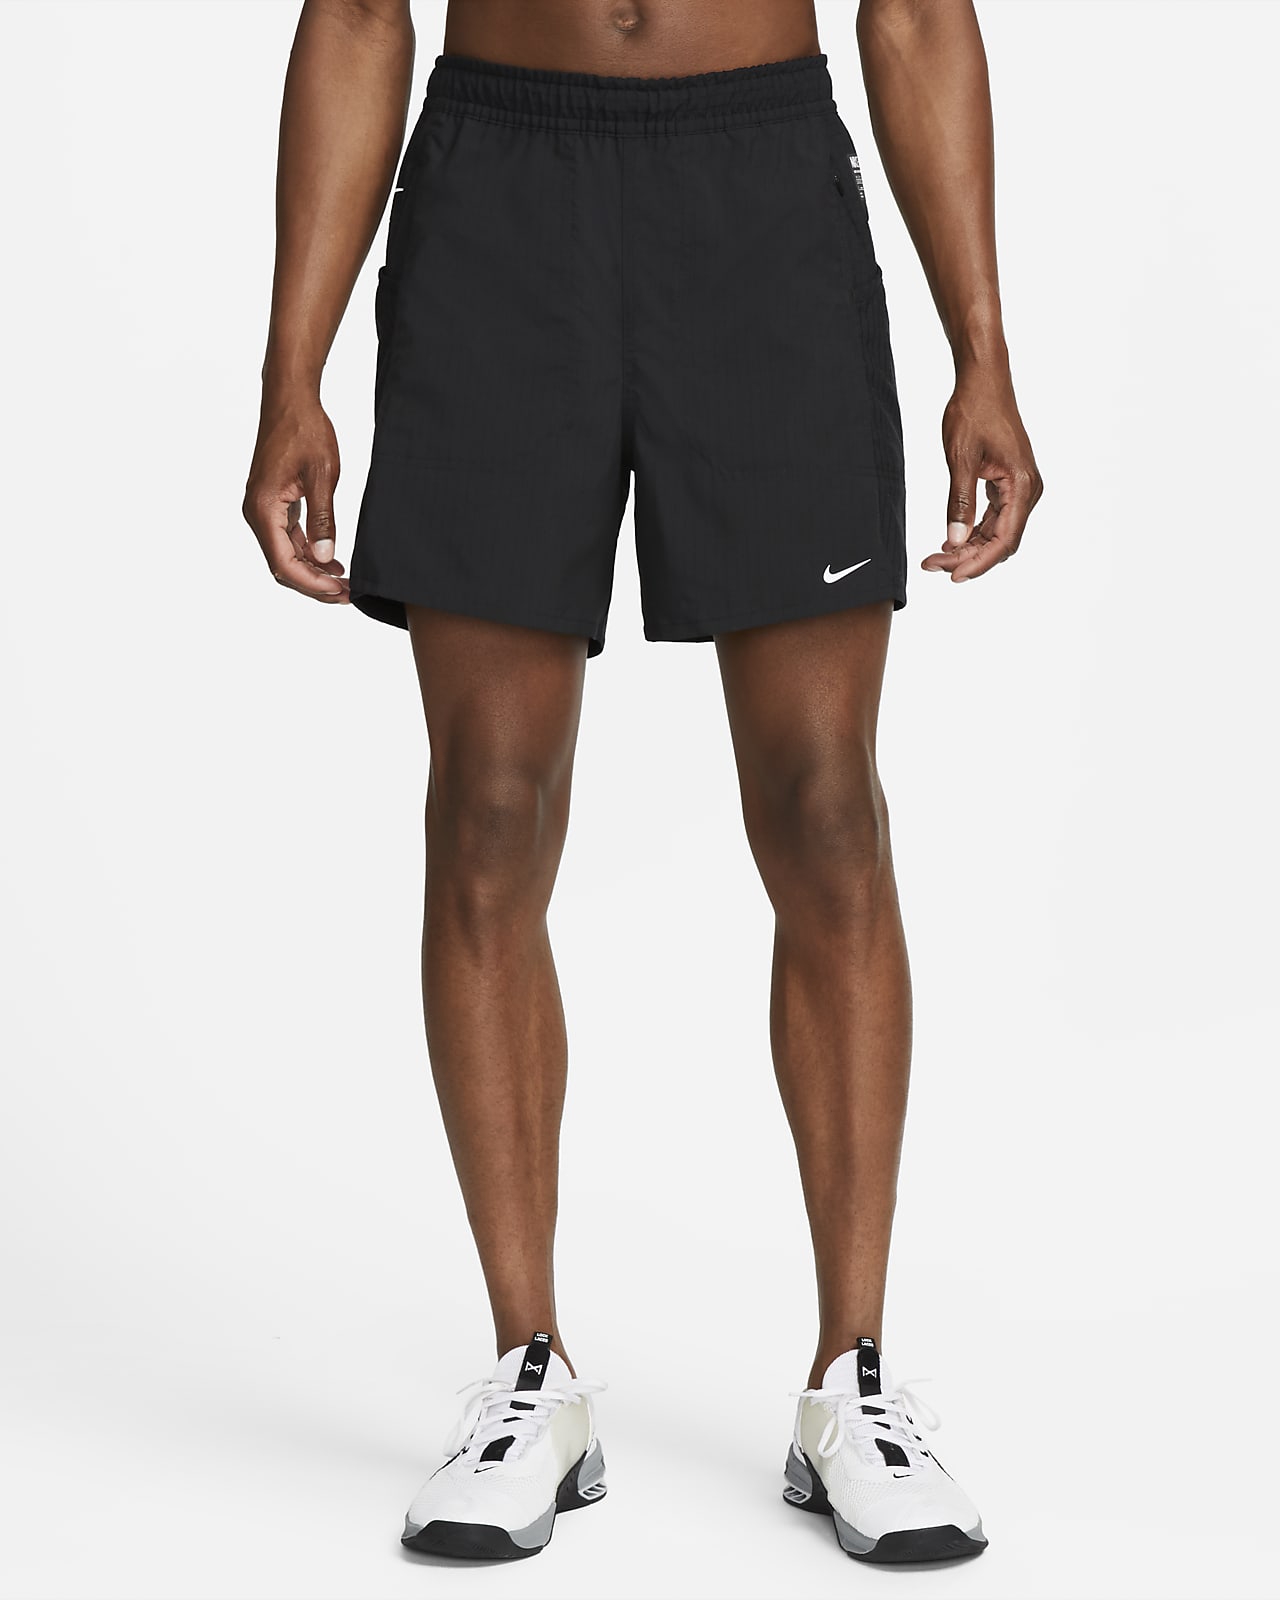 NIKE Men's Dry Training Shorts, Anthracite/Anthracite/Black, X